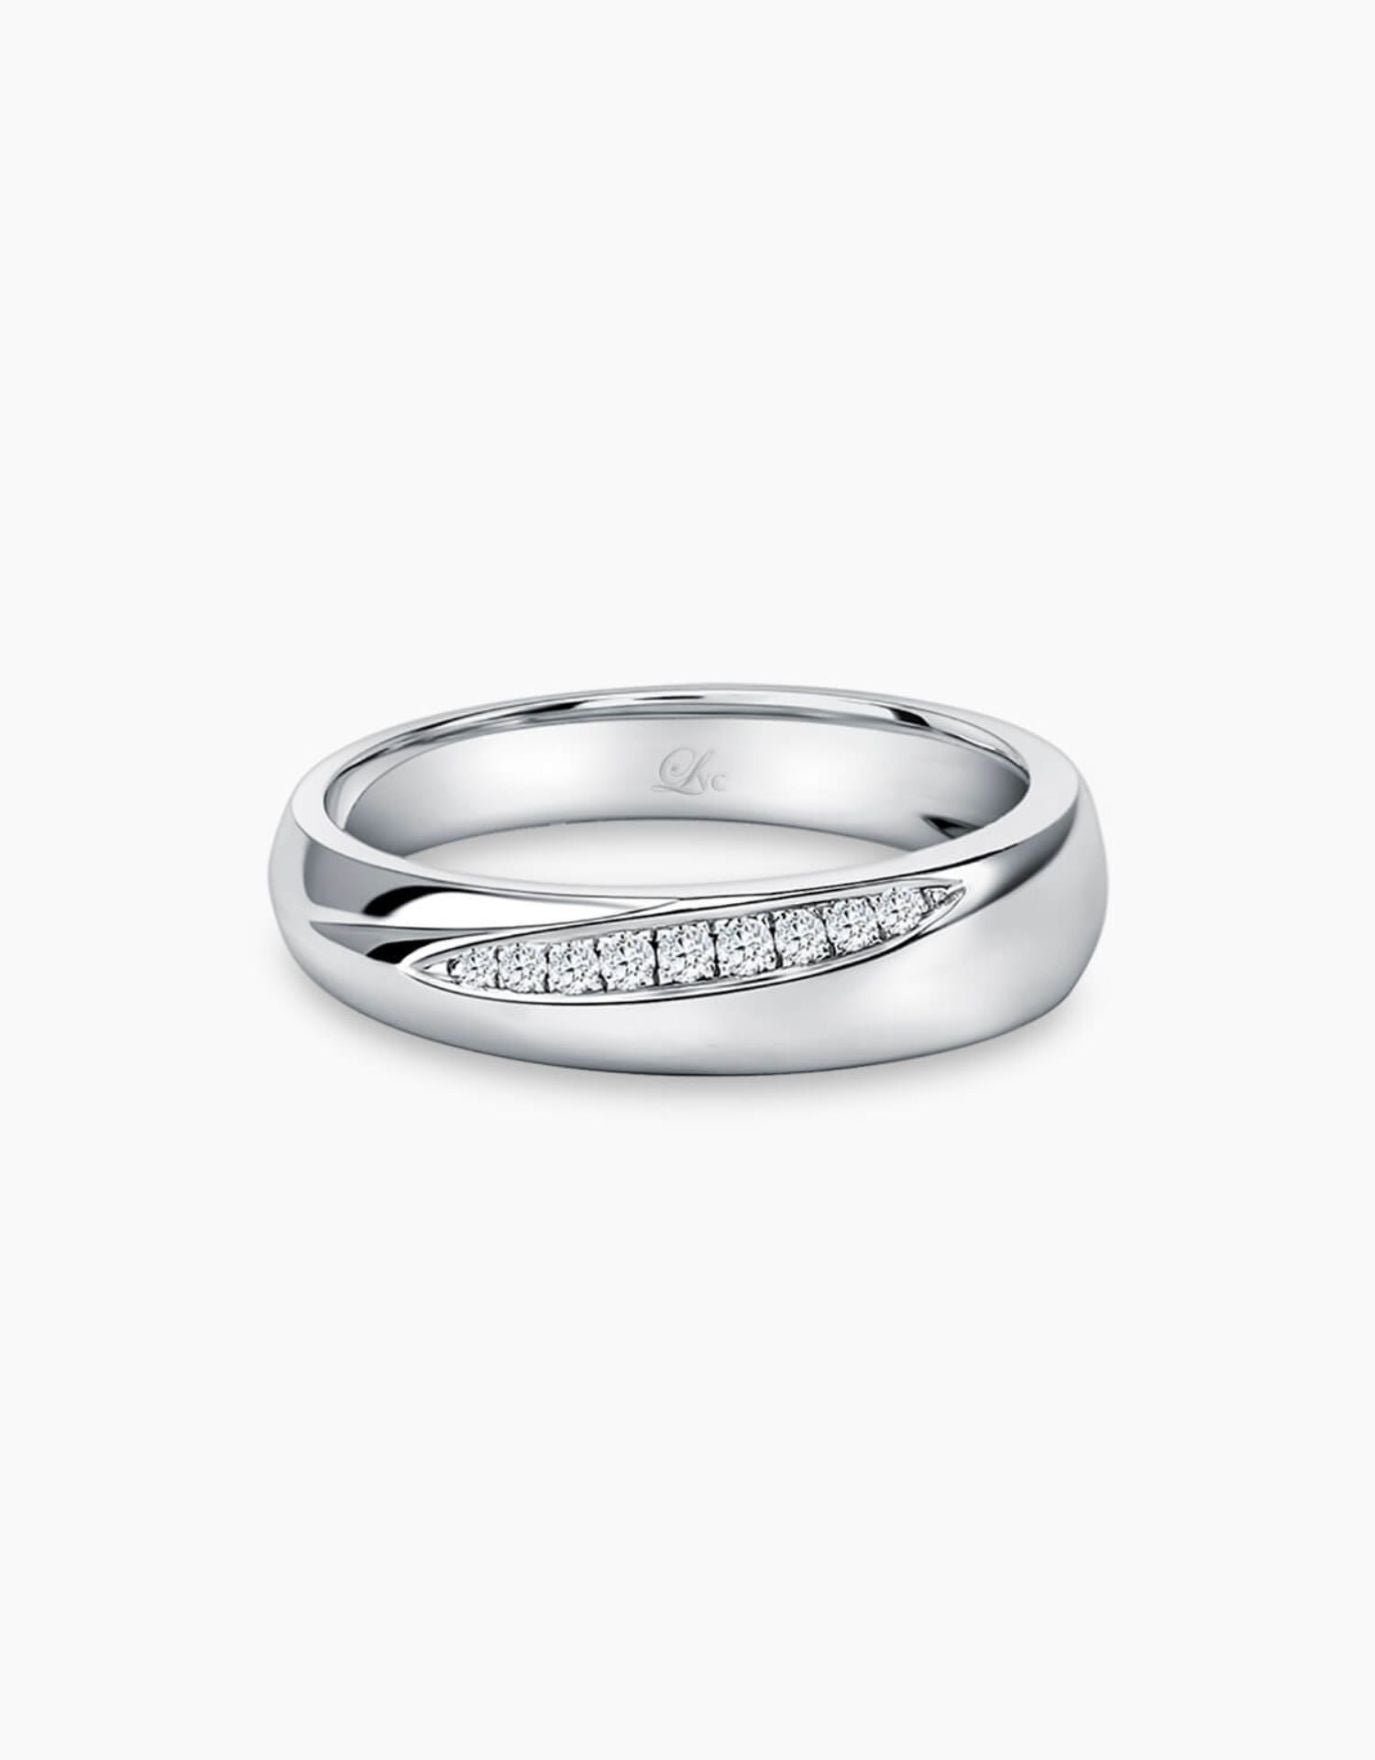 LVC Purete Trust Wedding Band with Diamonds Inlay in Platinum